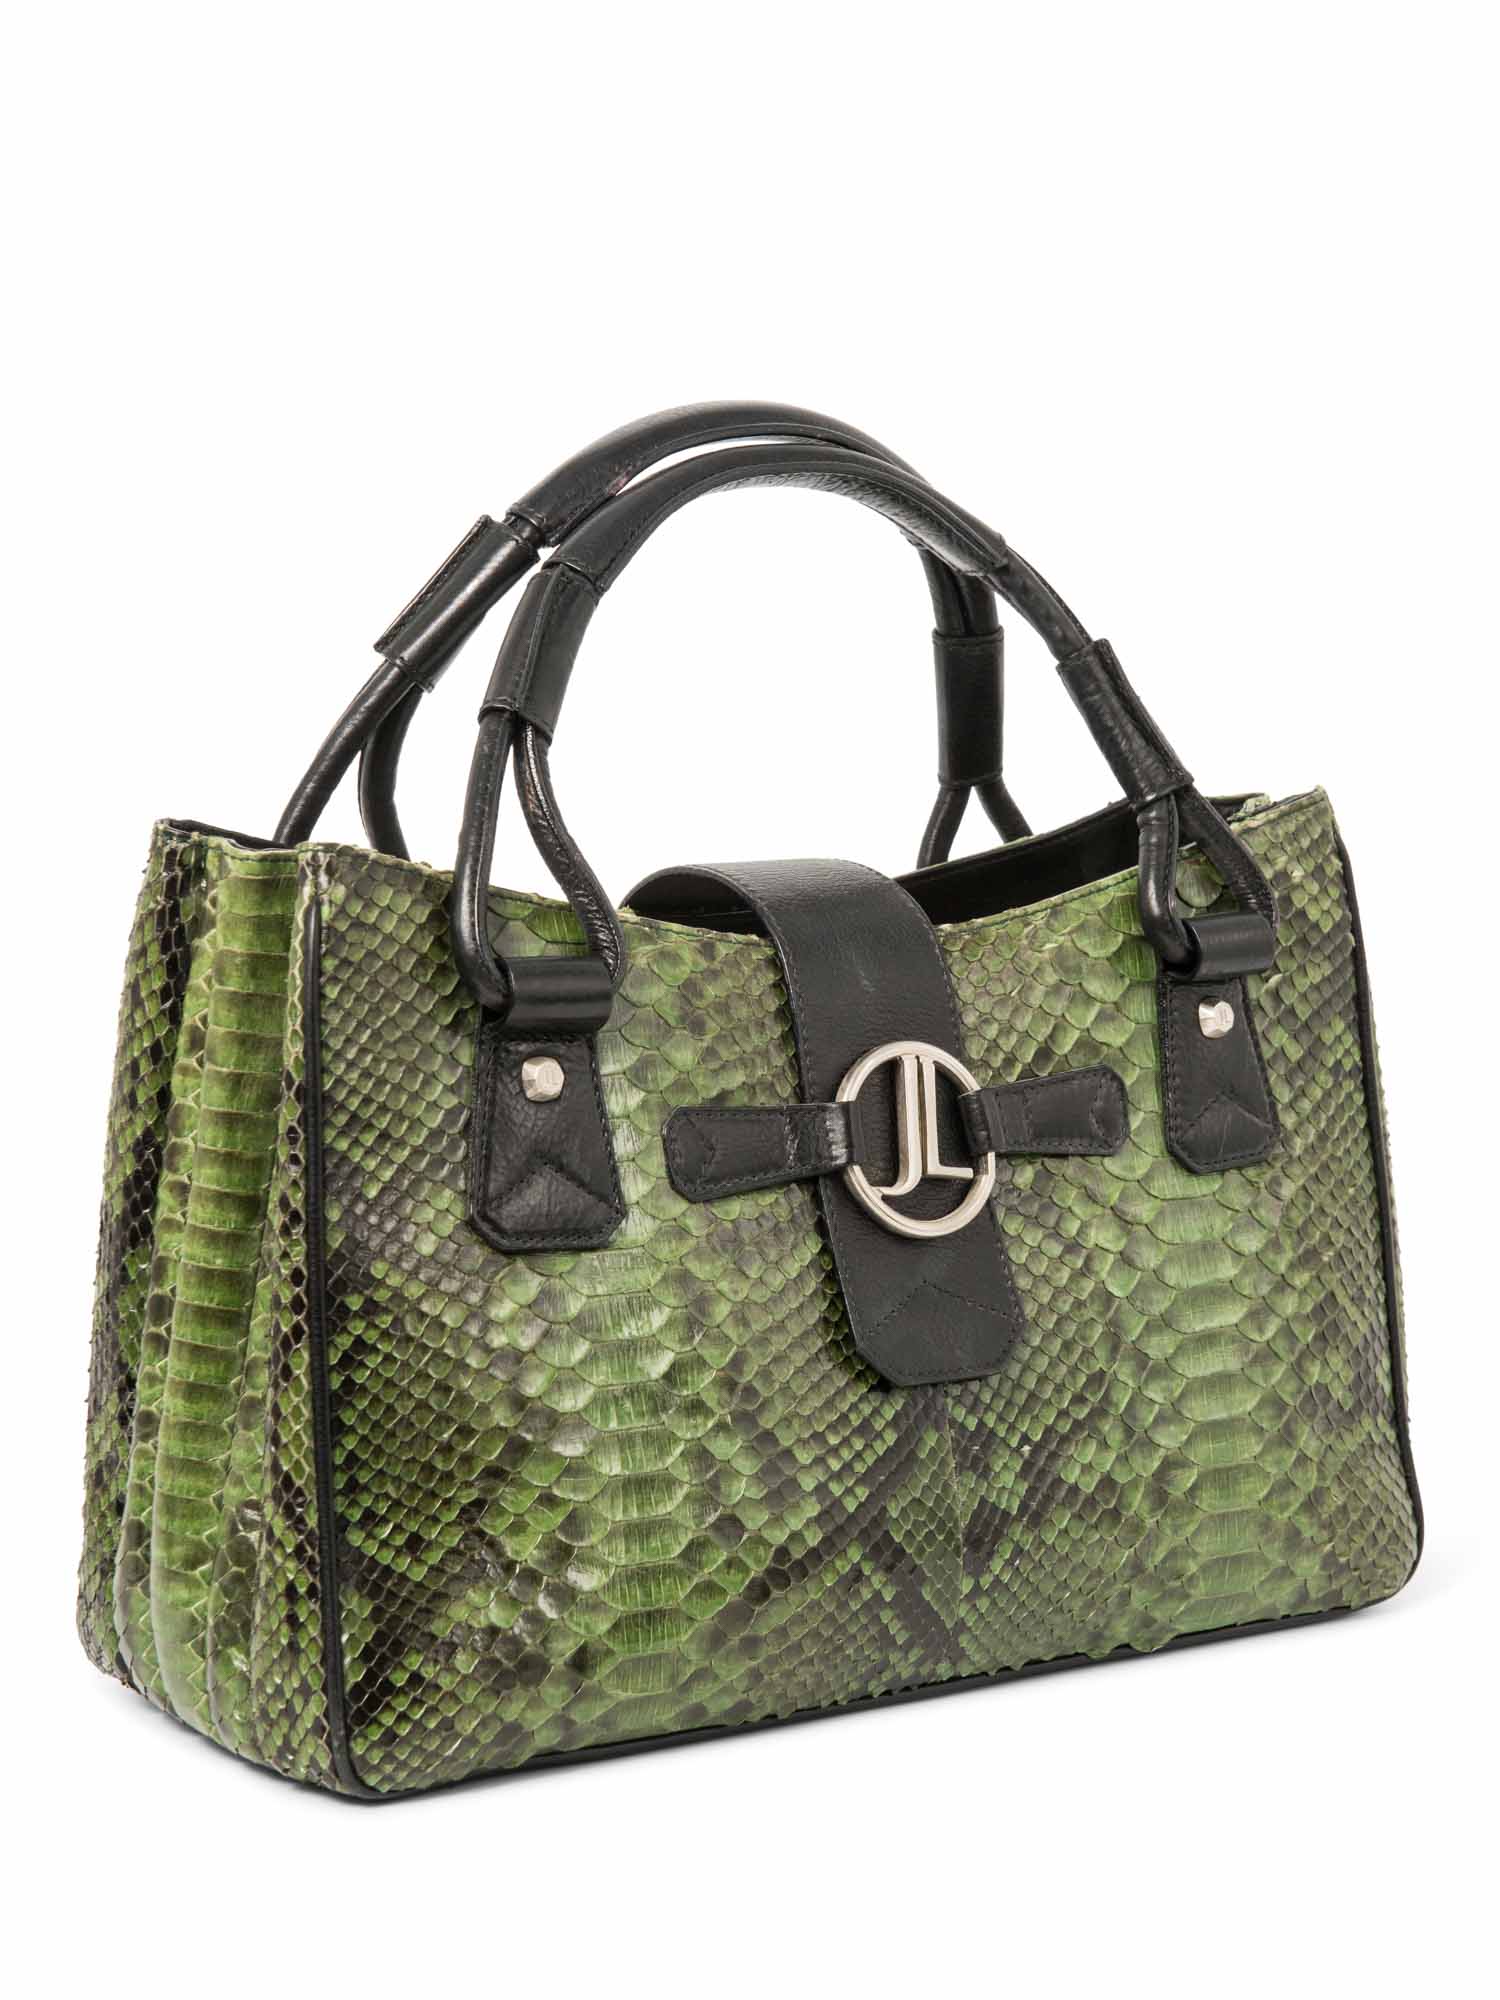 Judith Leiber Logo Python Leather Top Handle Bag Green Black